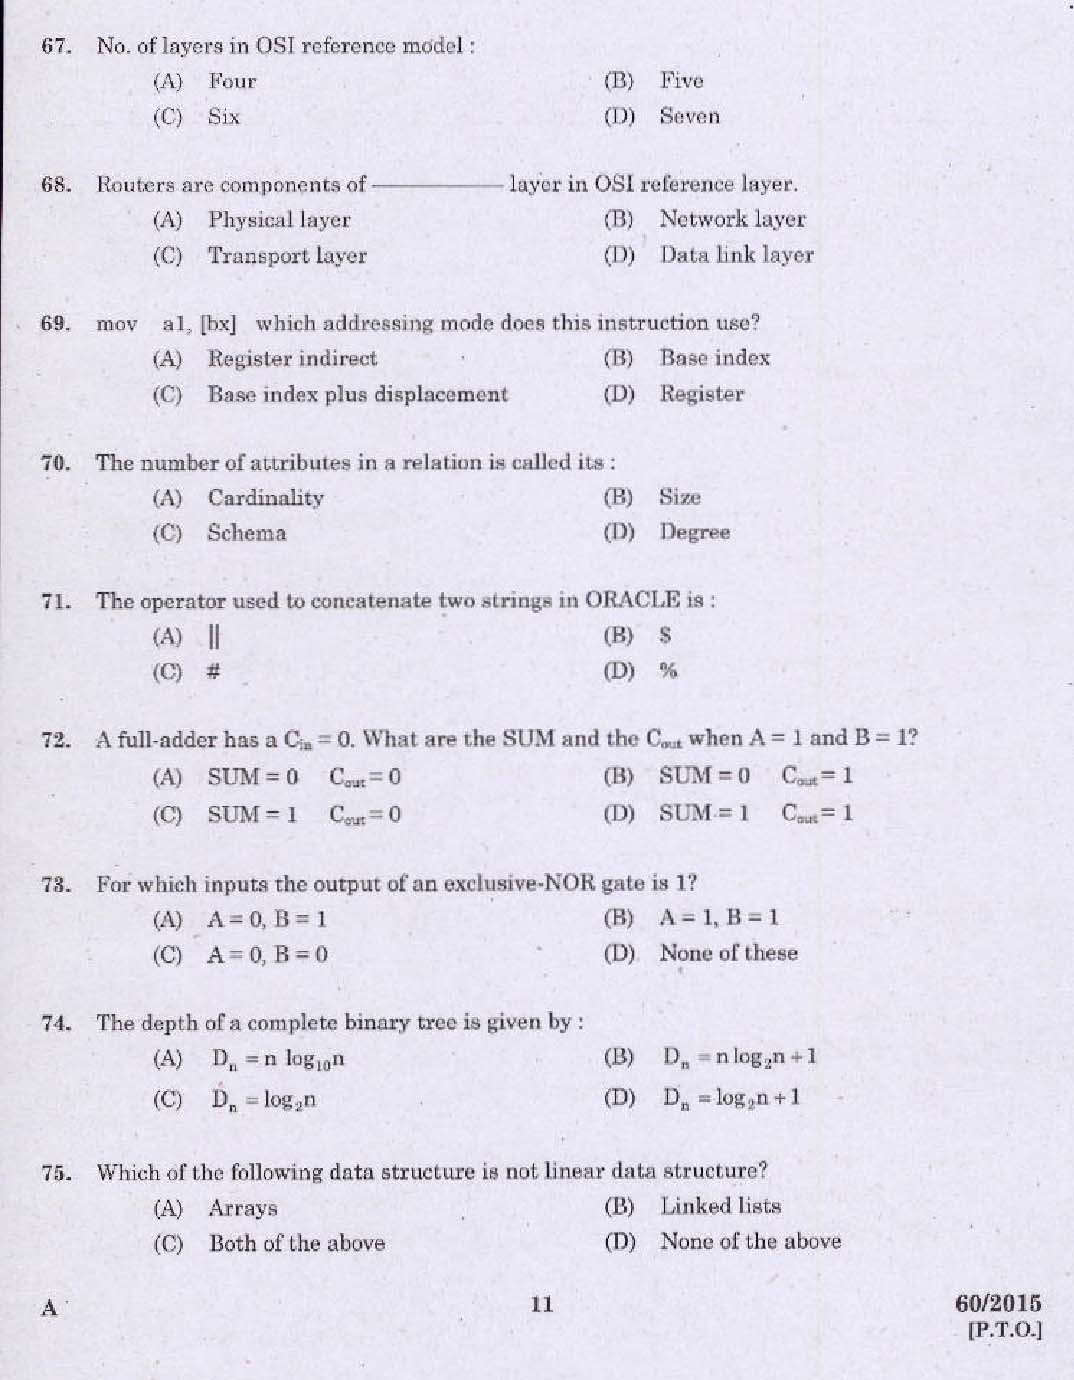 Kerala PSC Computer Programmer Exam 2015 Question Paper Code 602015 9